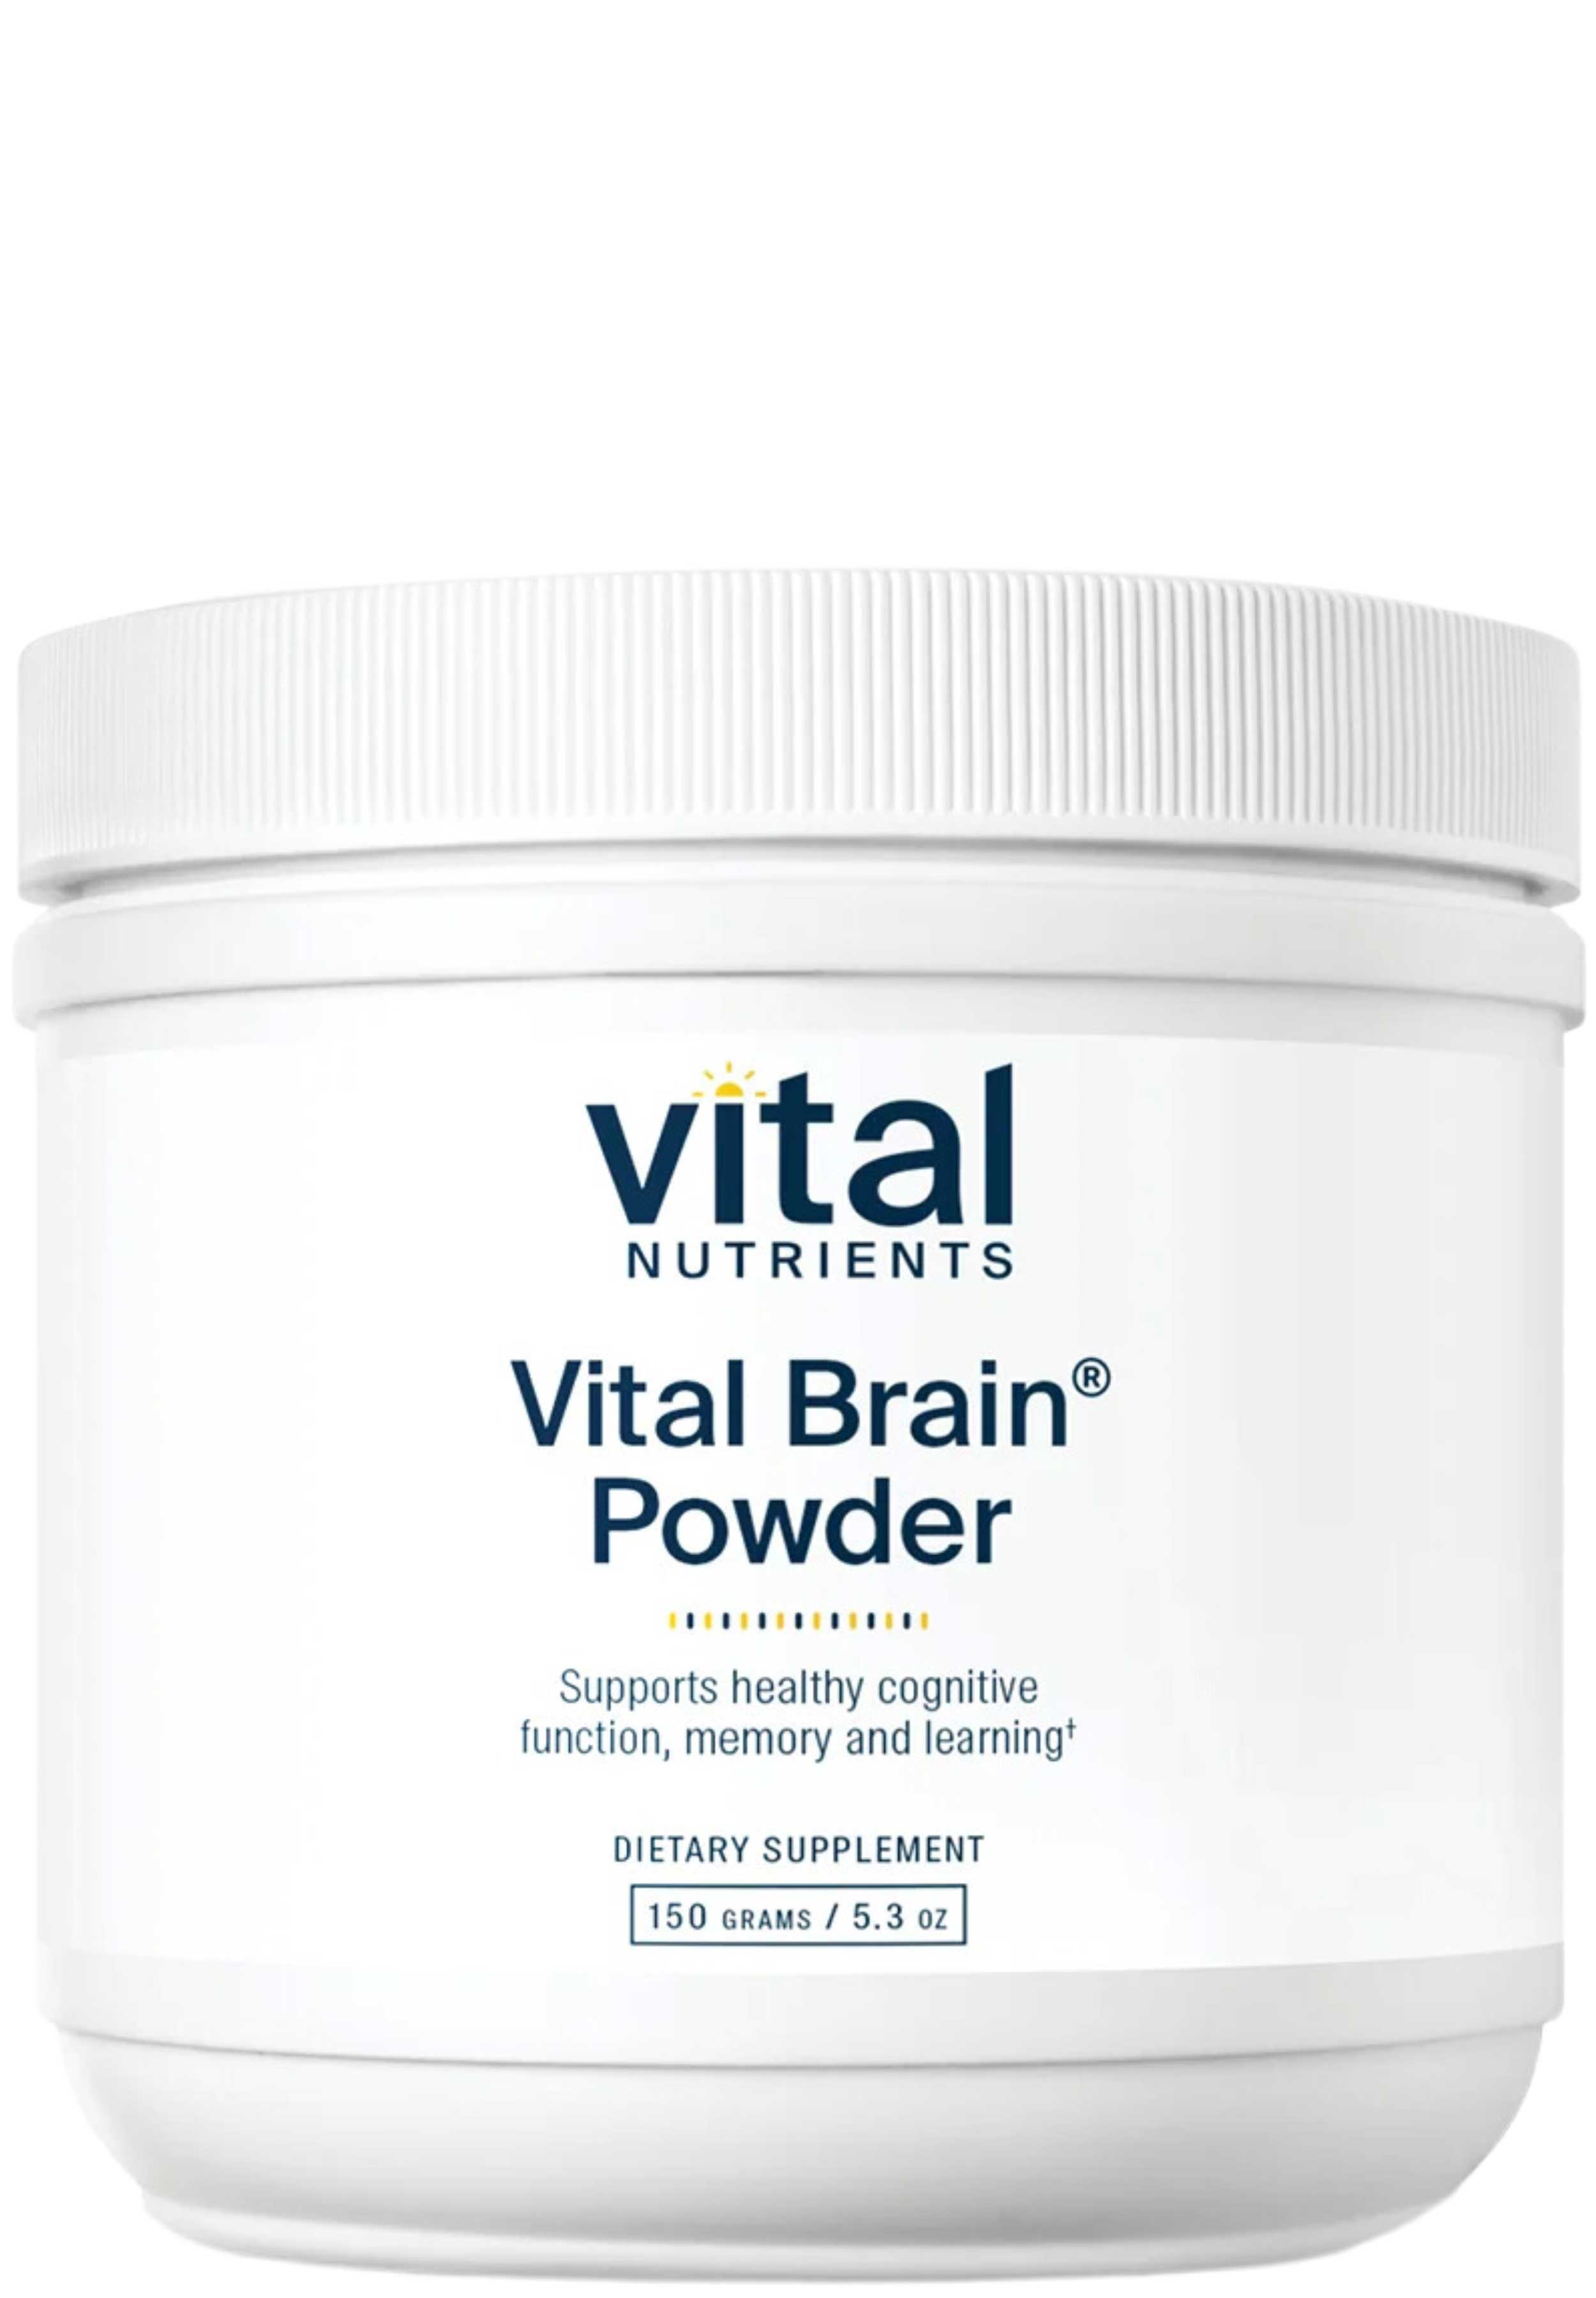 Vital Nutrients Vital Brain Powder™